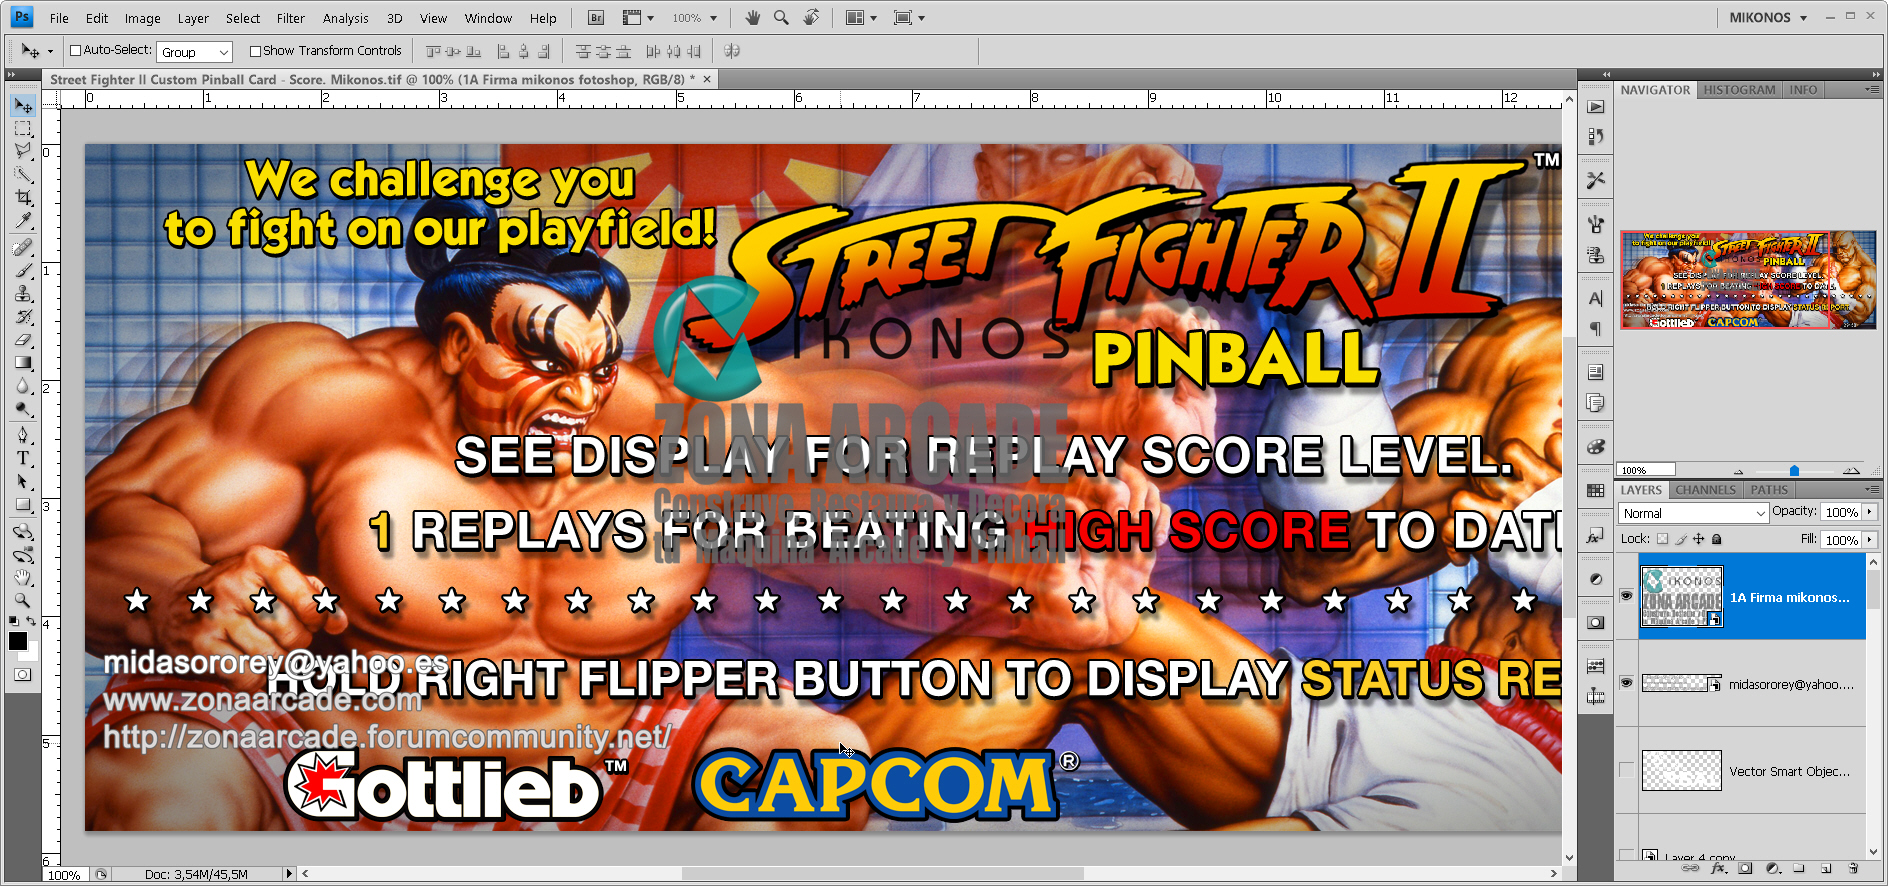 Street Fighter II Custom Pinball Card - Score. Mikonos2